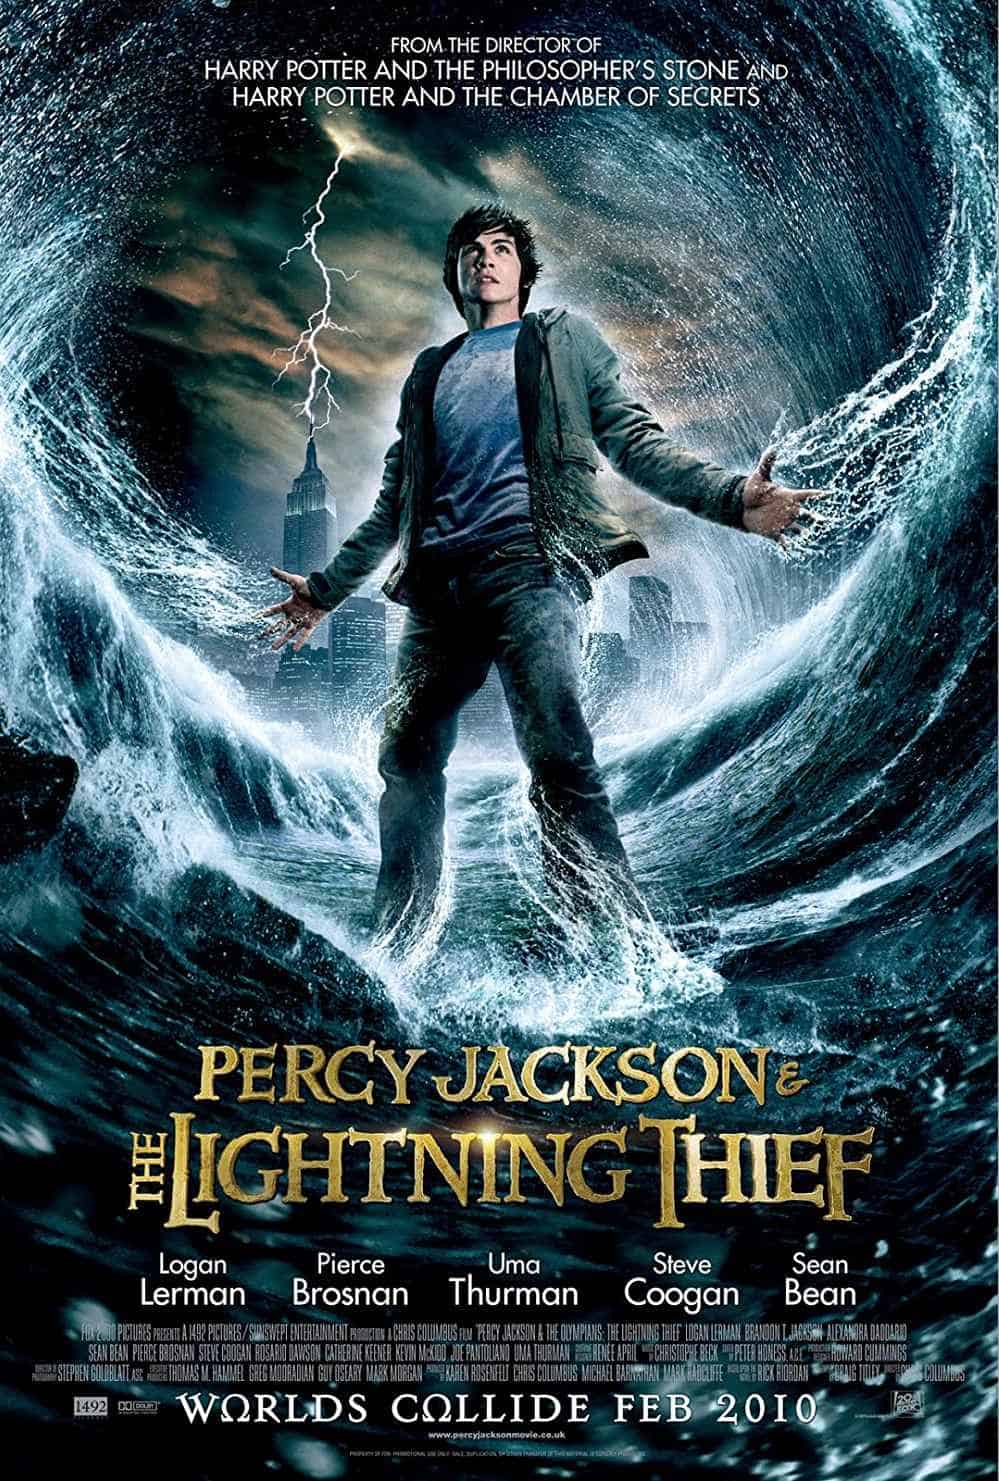 Harry Potter like movie Percy Jackson & the Olympians The Lightning Thief